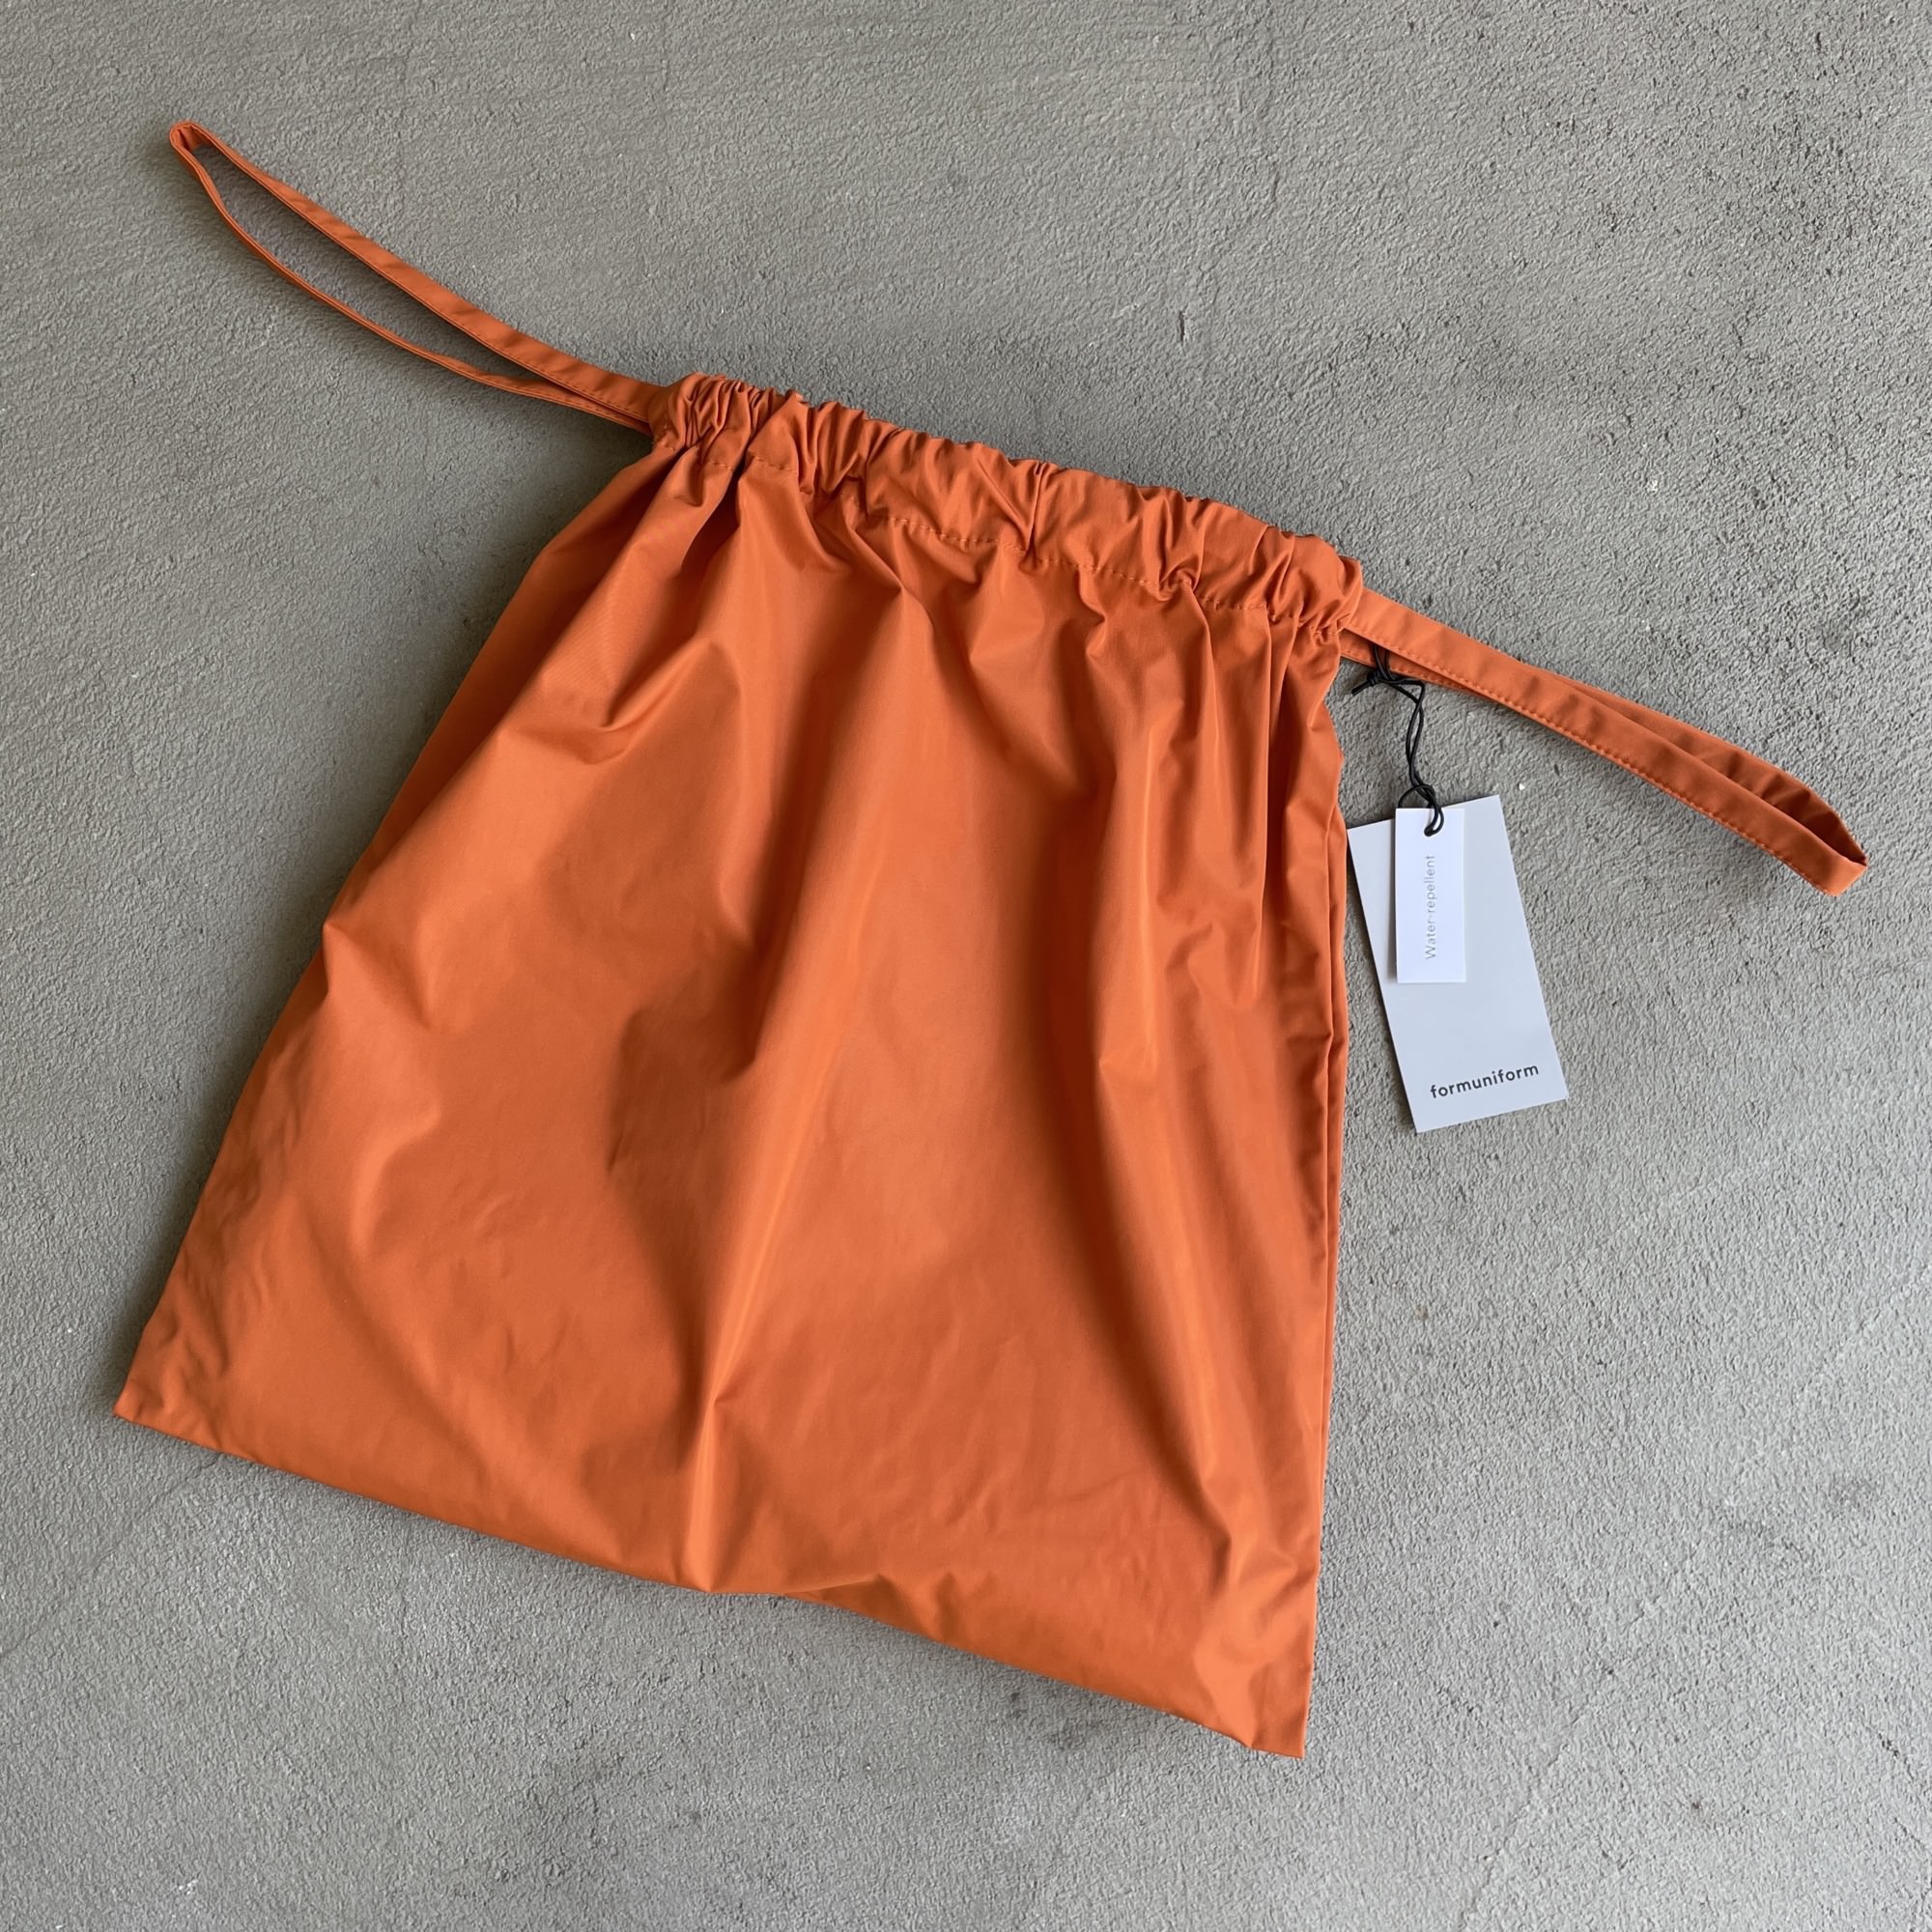 formuniform DRAWSTRING BAG S / Orange